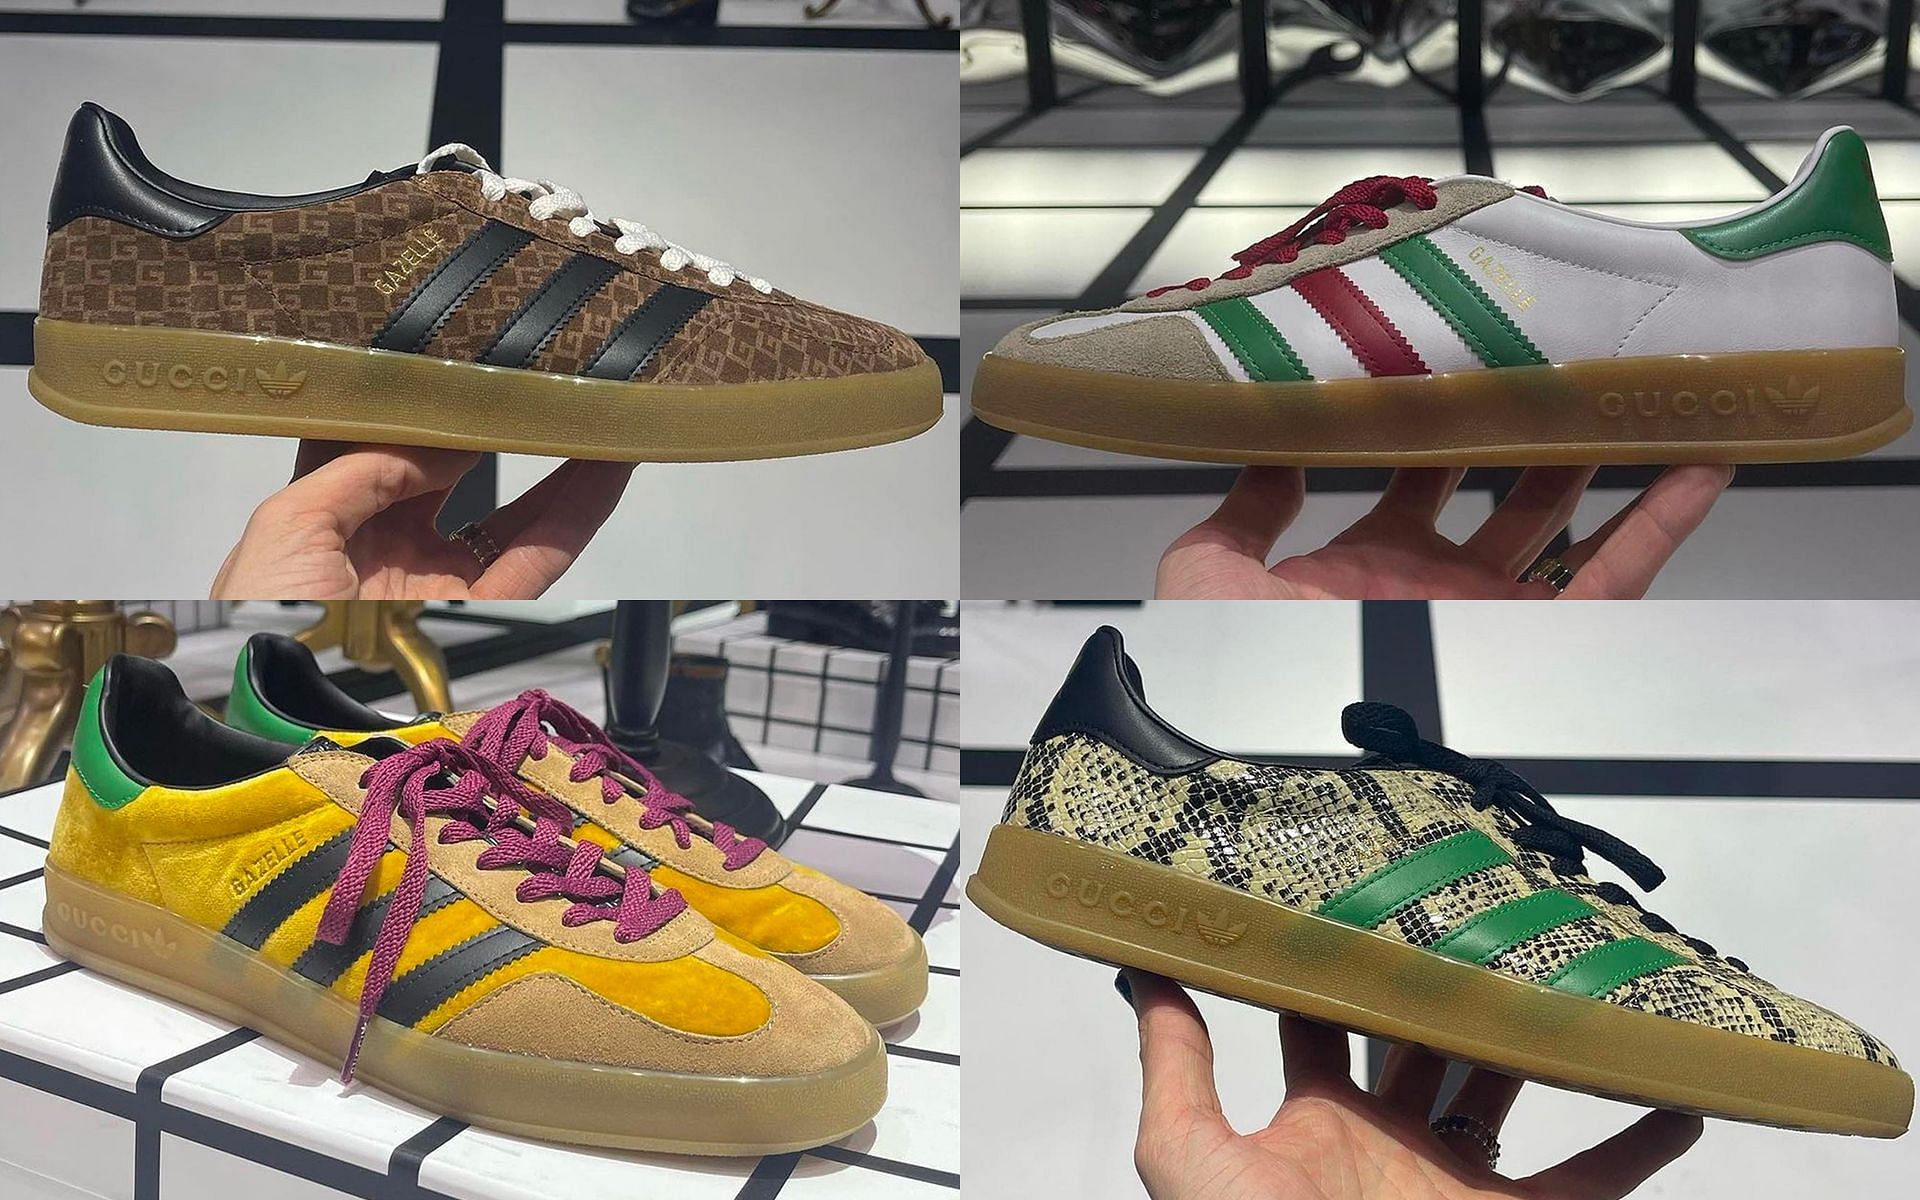 Gucci X Adidas Gazelle sneakers (Image via Sportskeeda)